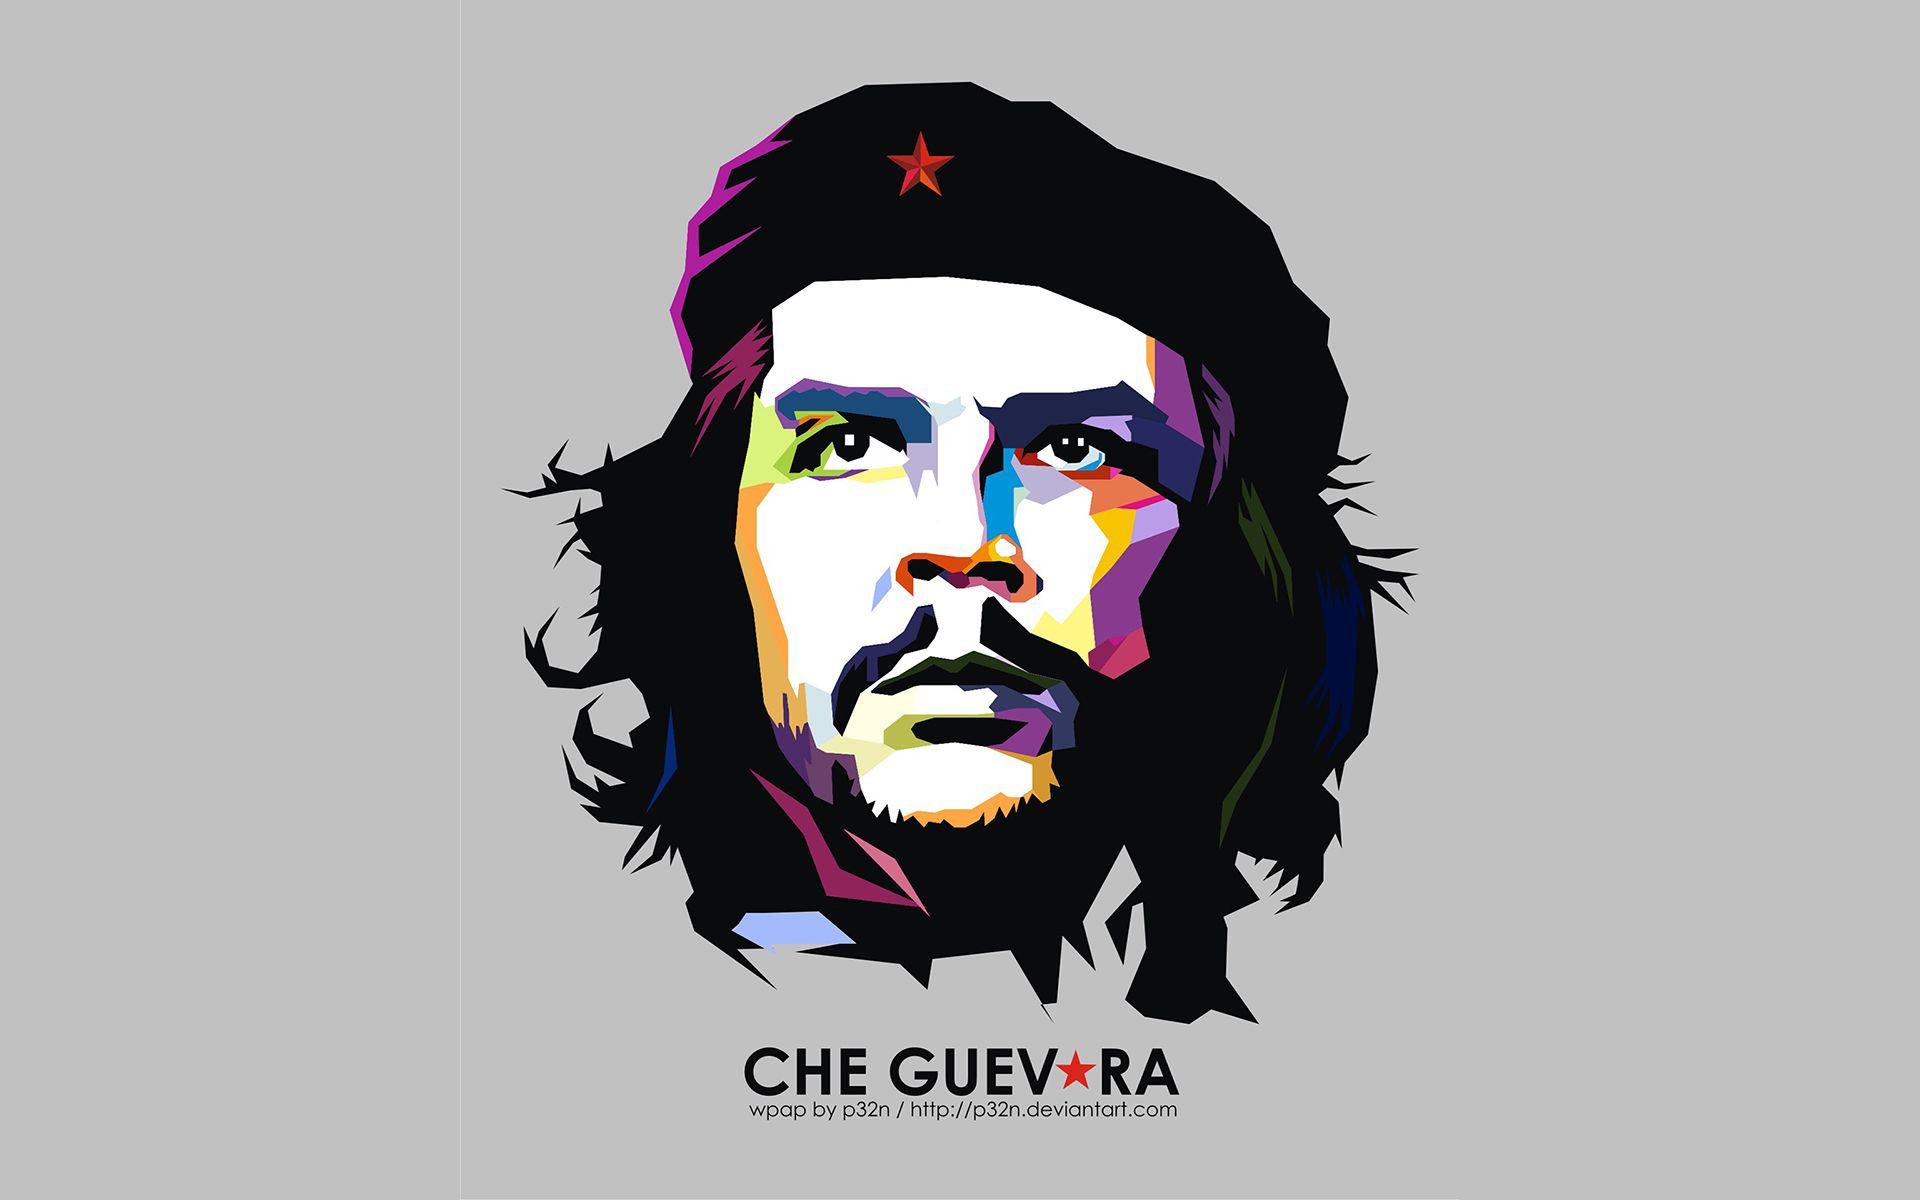 Che Guevara on WPAP Design. Free Desktop HD Wallpaper. Che guevara art, Wpap art, Ernesto che